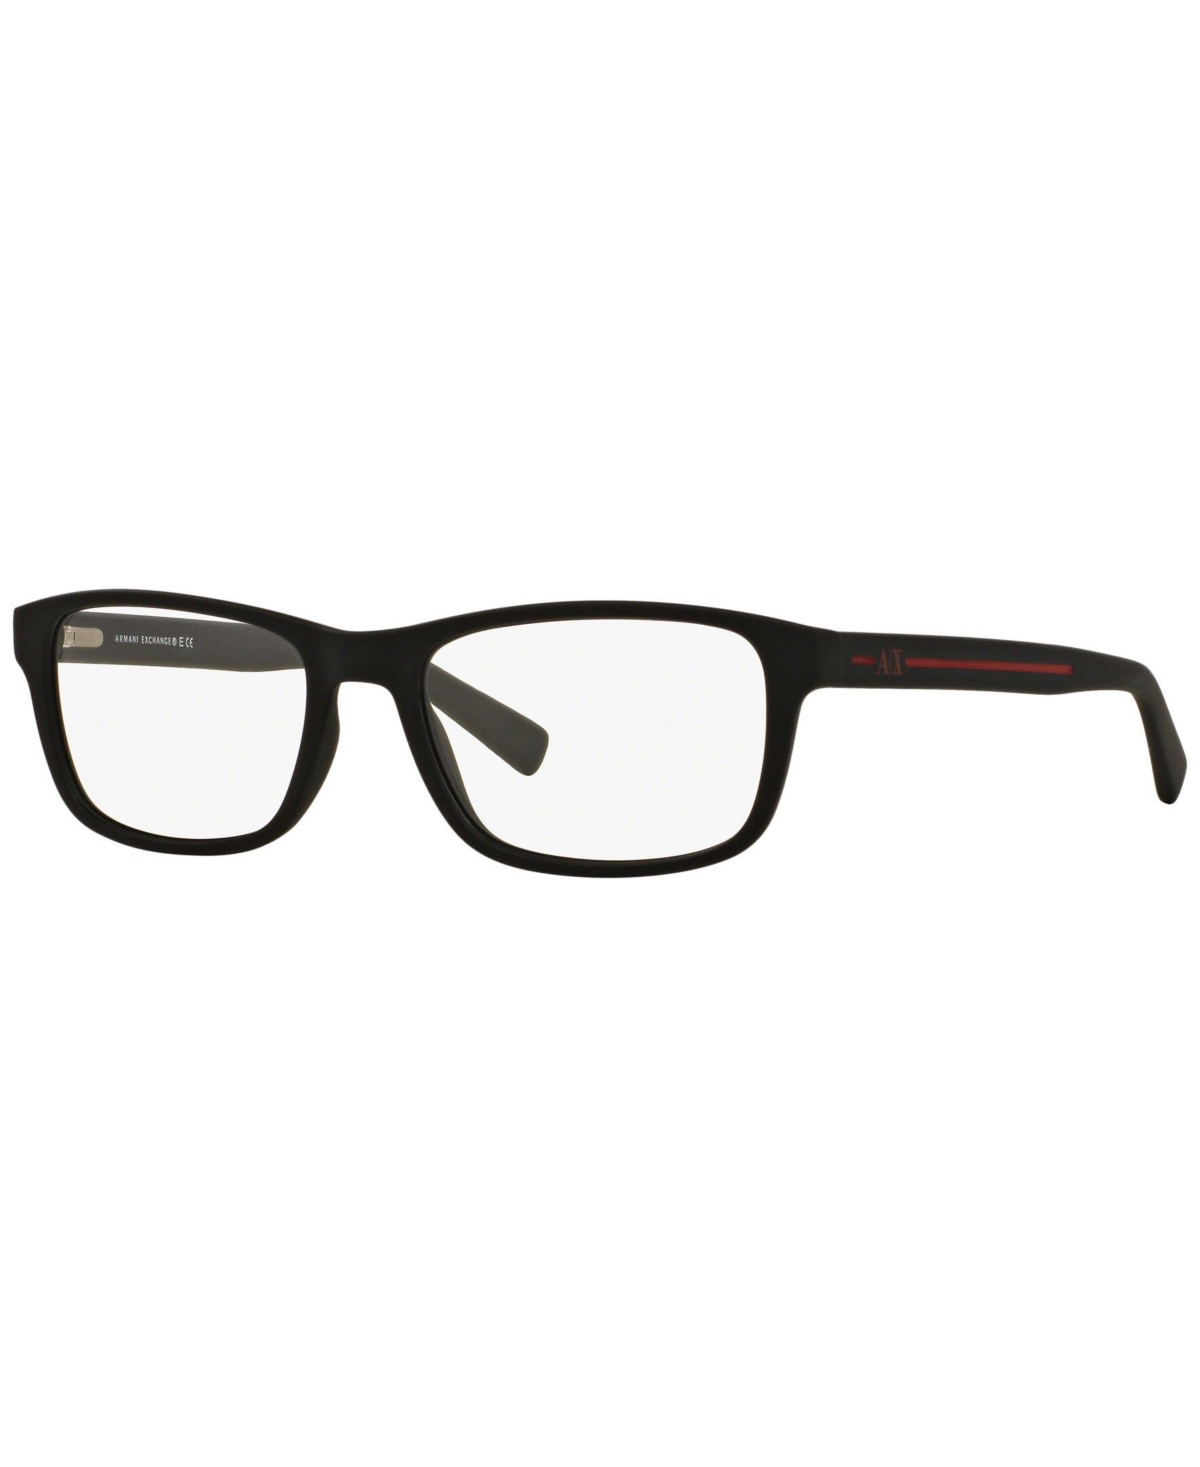 EAN 8053672409956 product image for Armani Exchange AX3021 Men's Rectangle Eyeglasses | upcitemdb.com